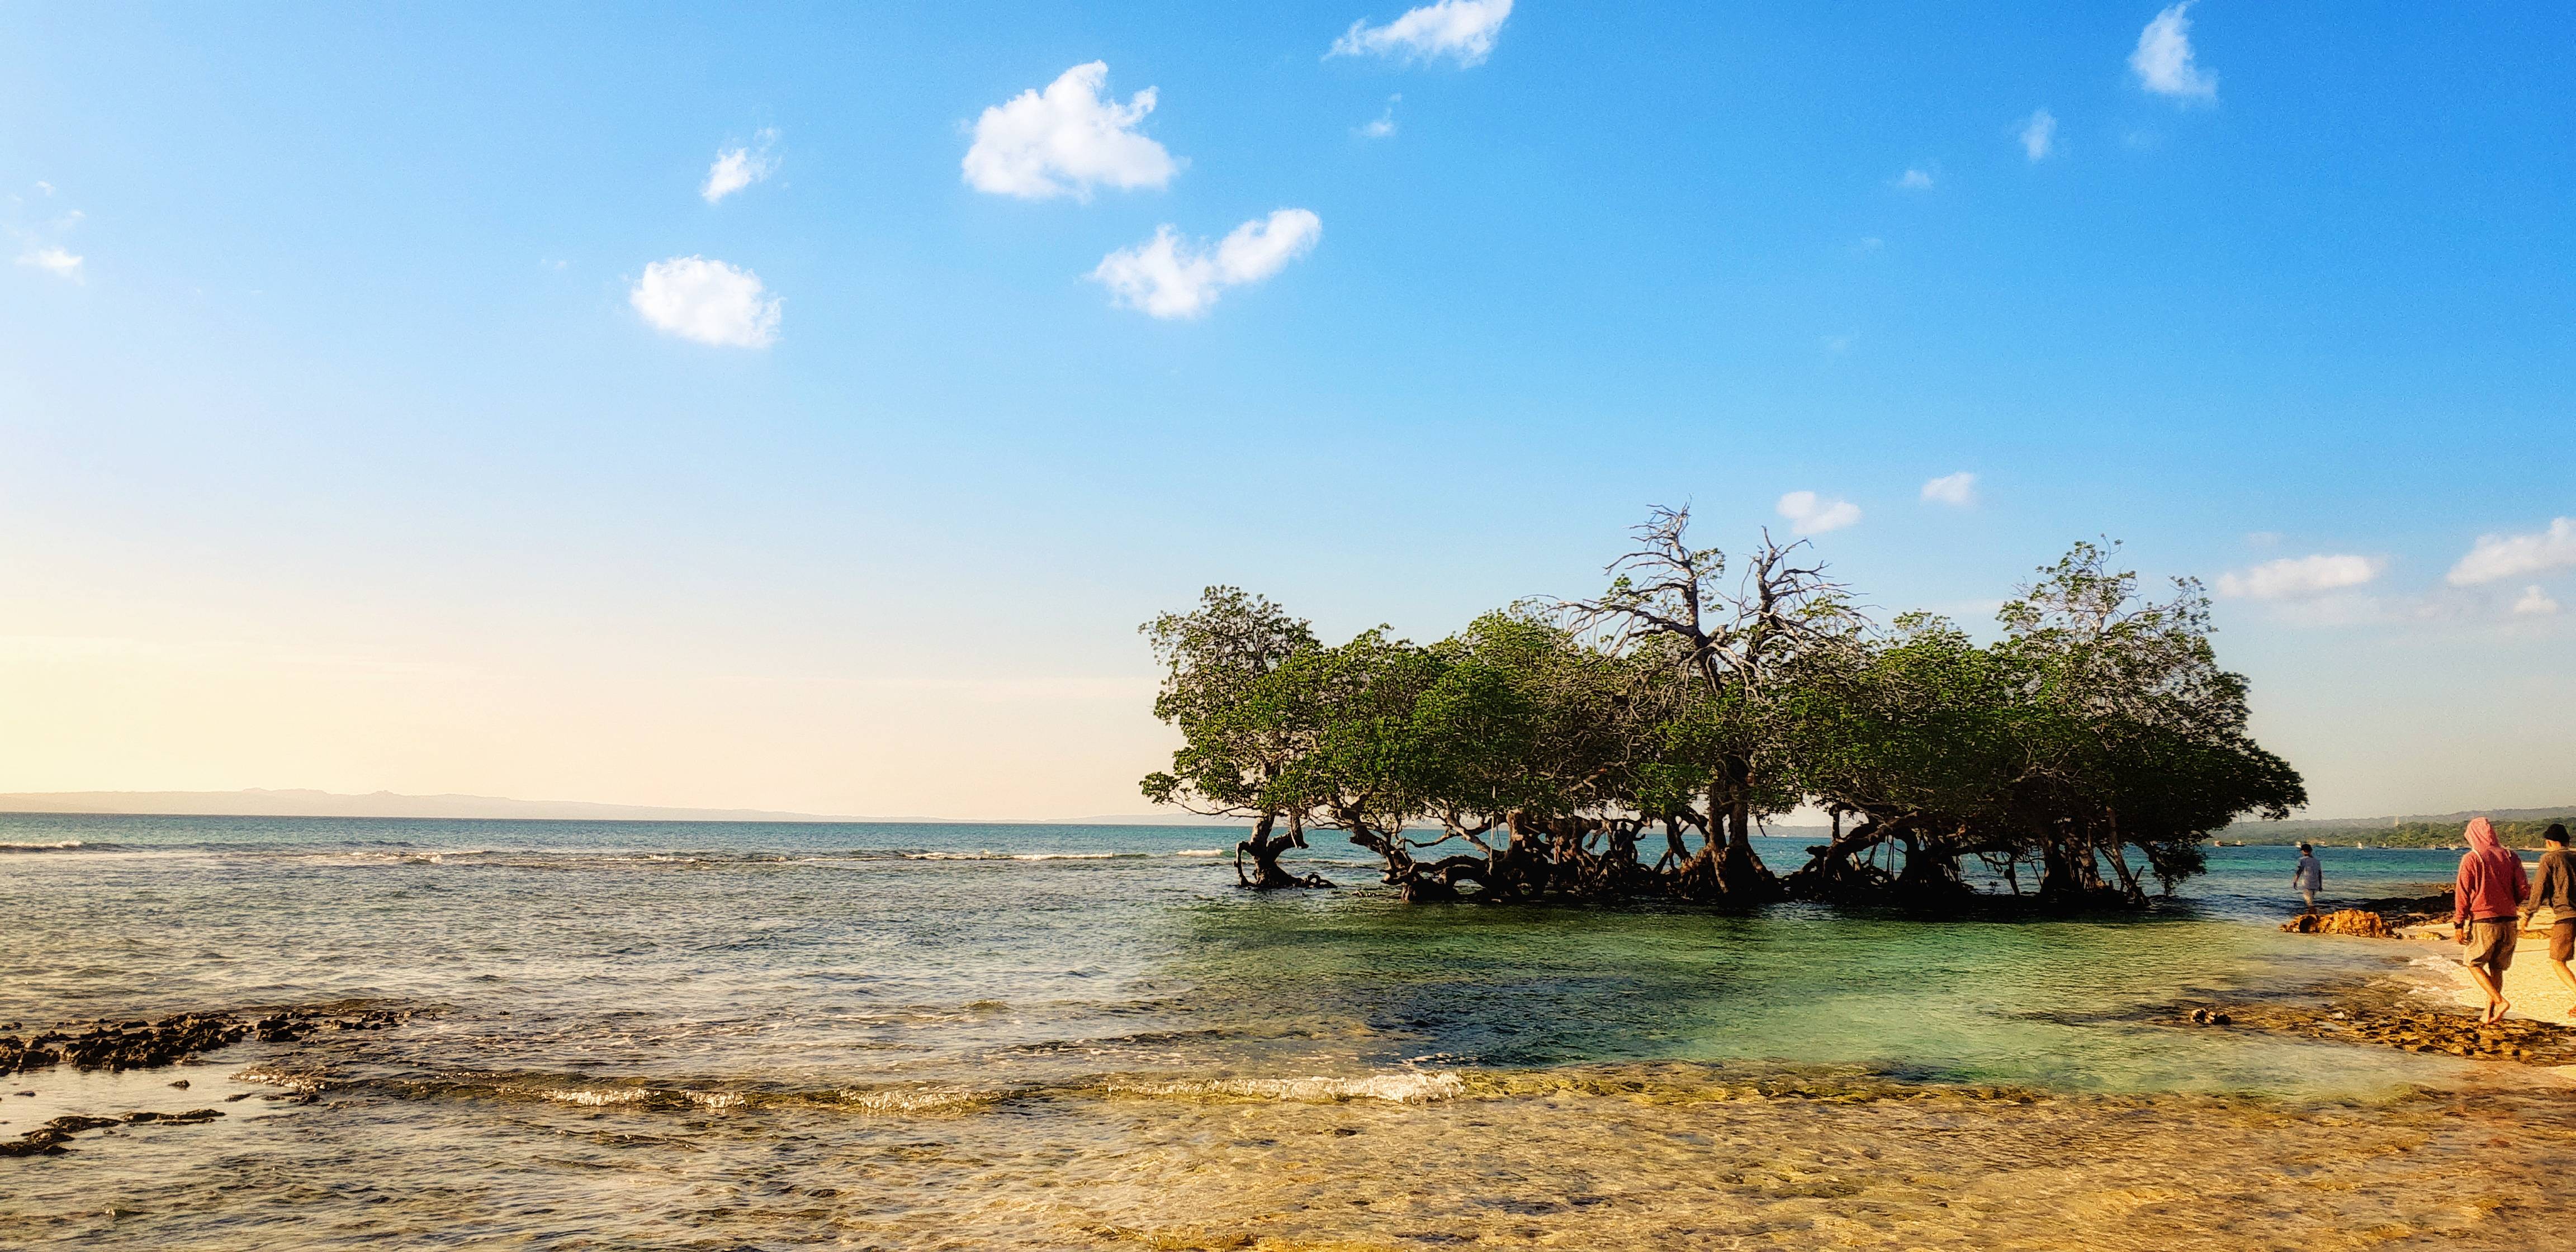 Pantai Tablolong, Wisata Bahari di Kupang dengan Berbagai